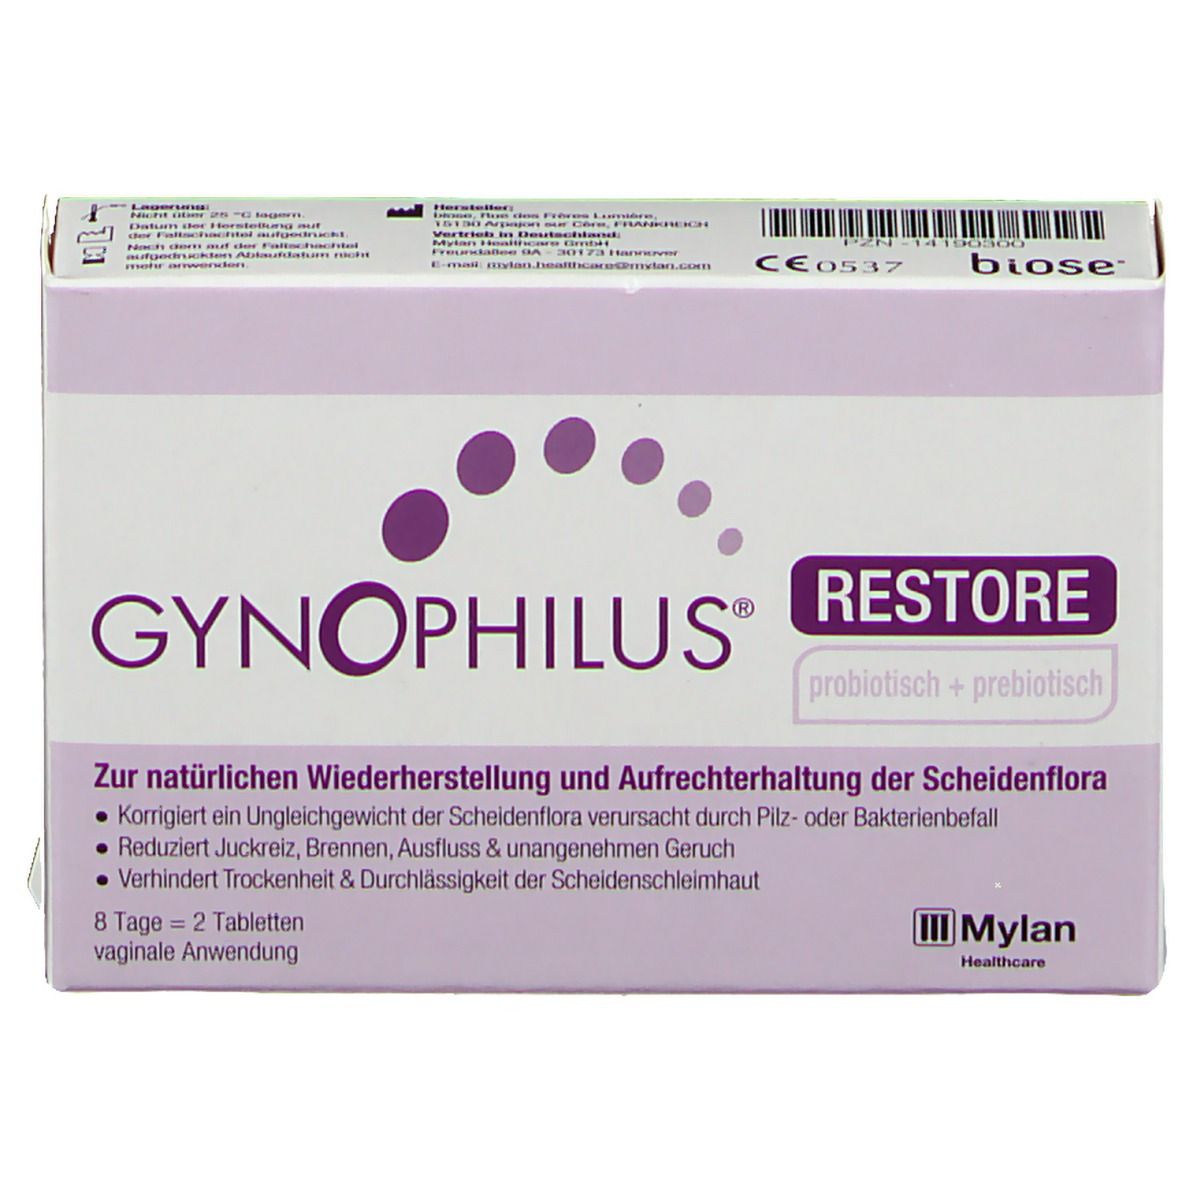 Gynophilus RESTORE